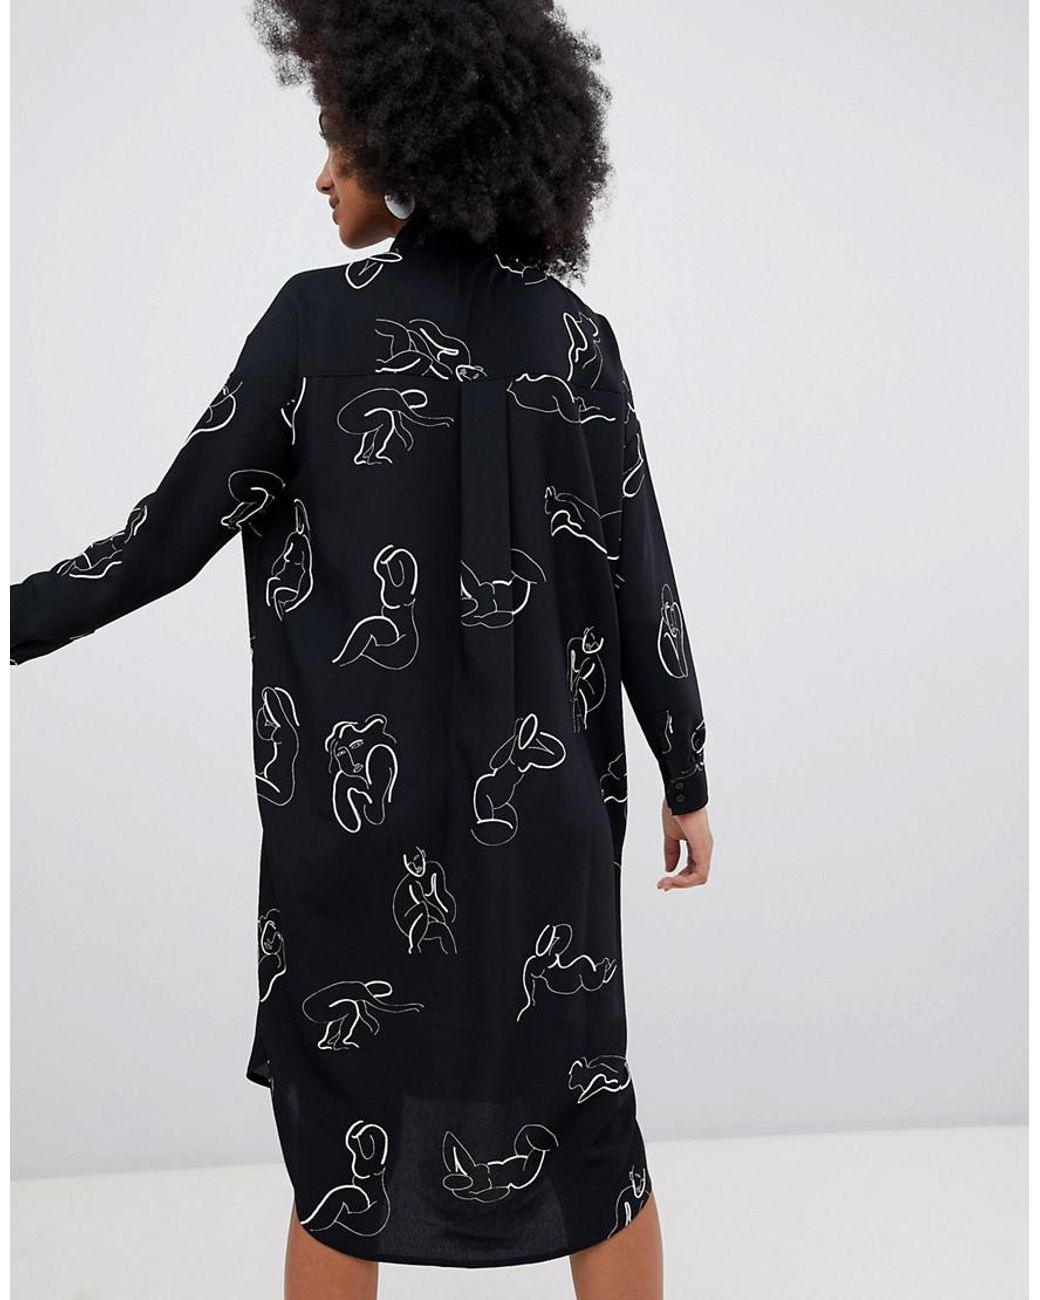 Monki Soft Body Print Shirt Dress With Pocket in Black | Lyst